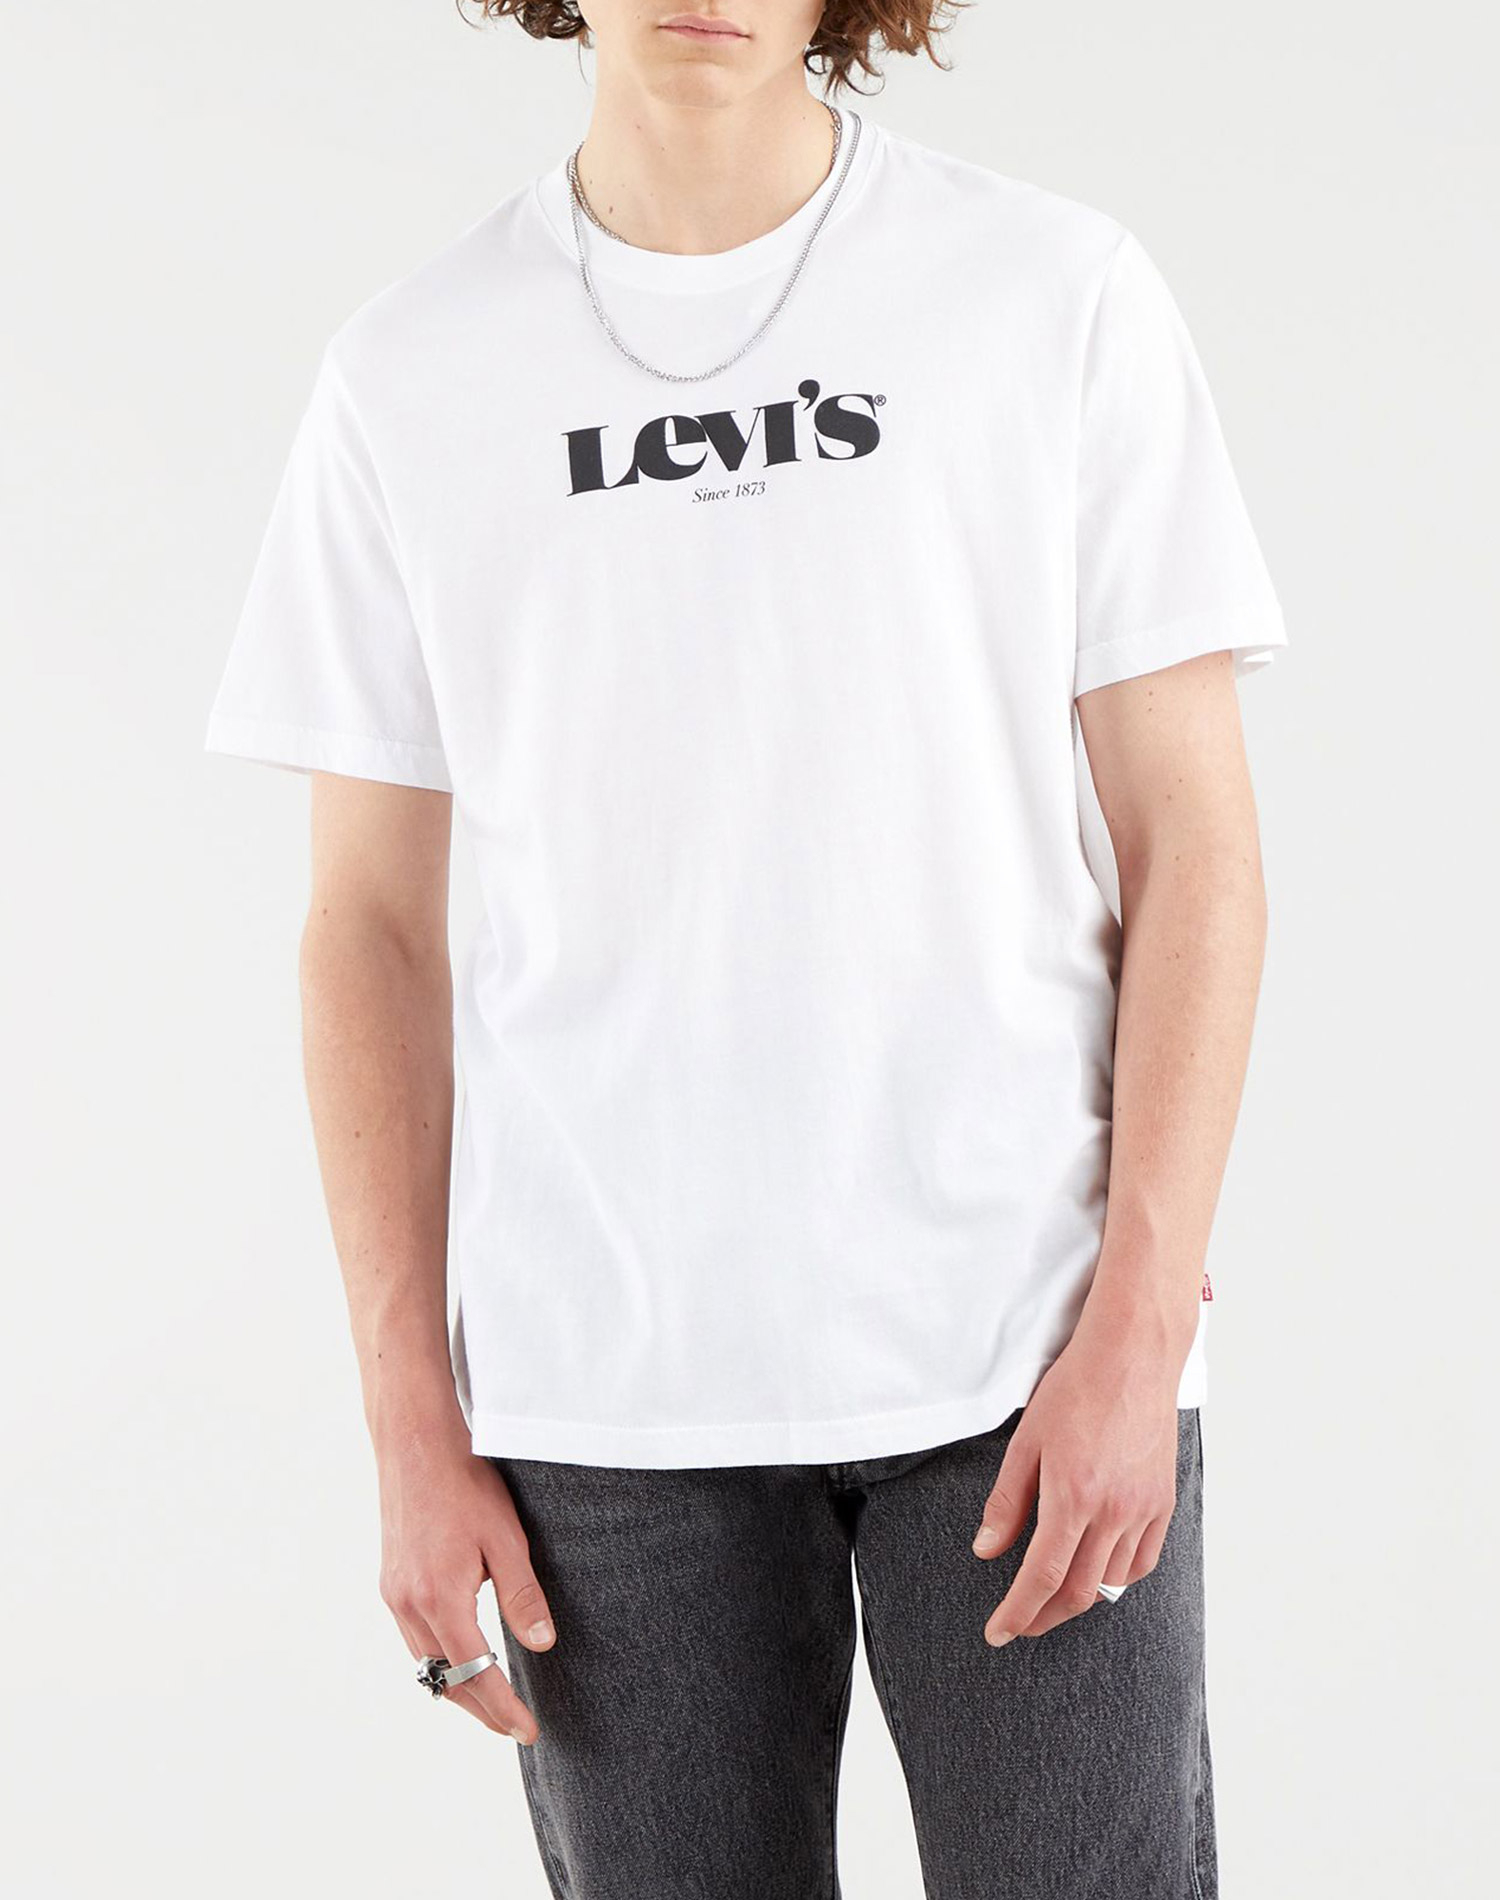 Camiseta de hombre de corta Levi's, modelo 16143-0083, blanca